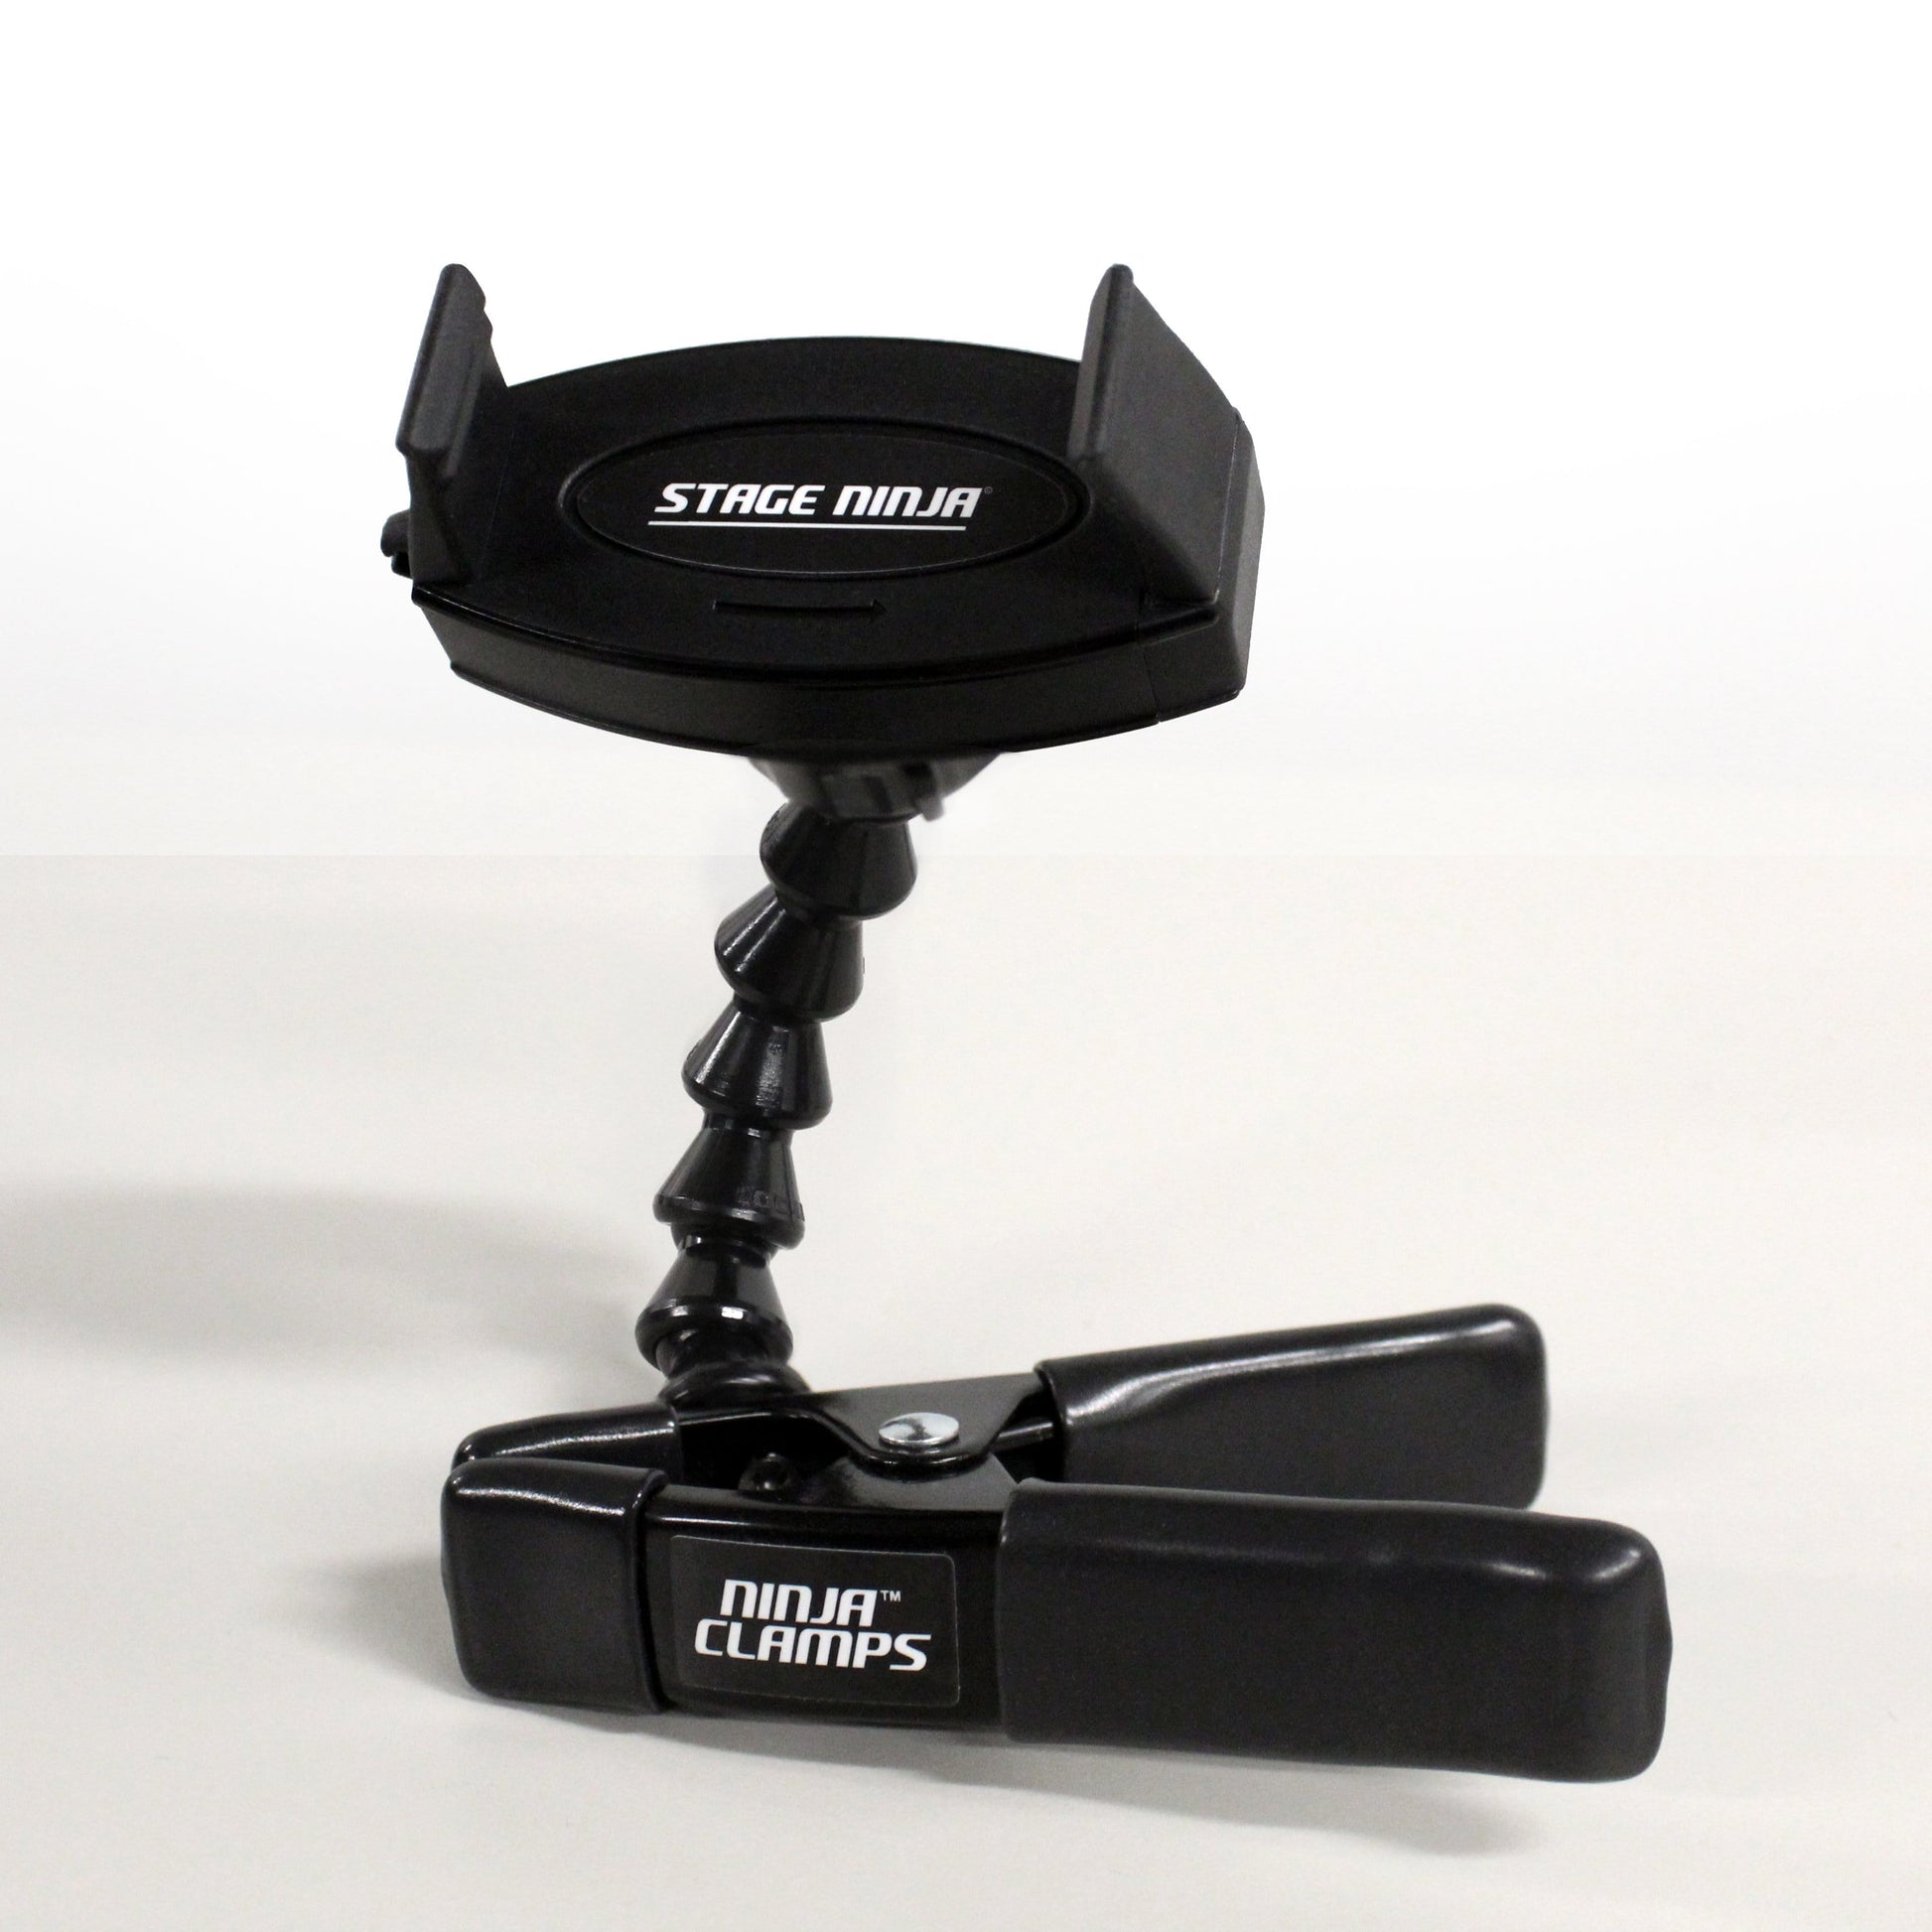 Stage Ninja FON-9-CB Universal Smartphone Mini-Clamp Stand/Mount - ProSound and Stage Lighting